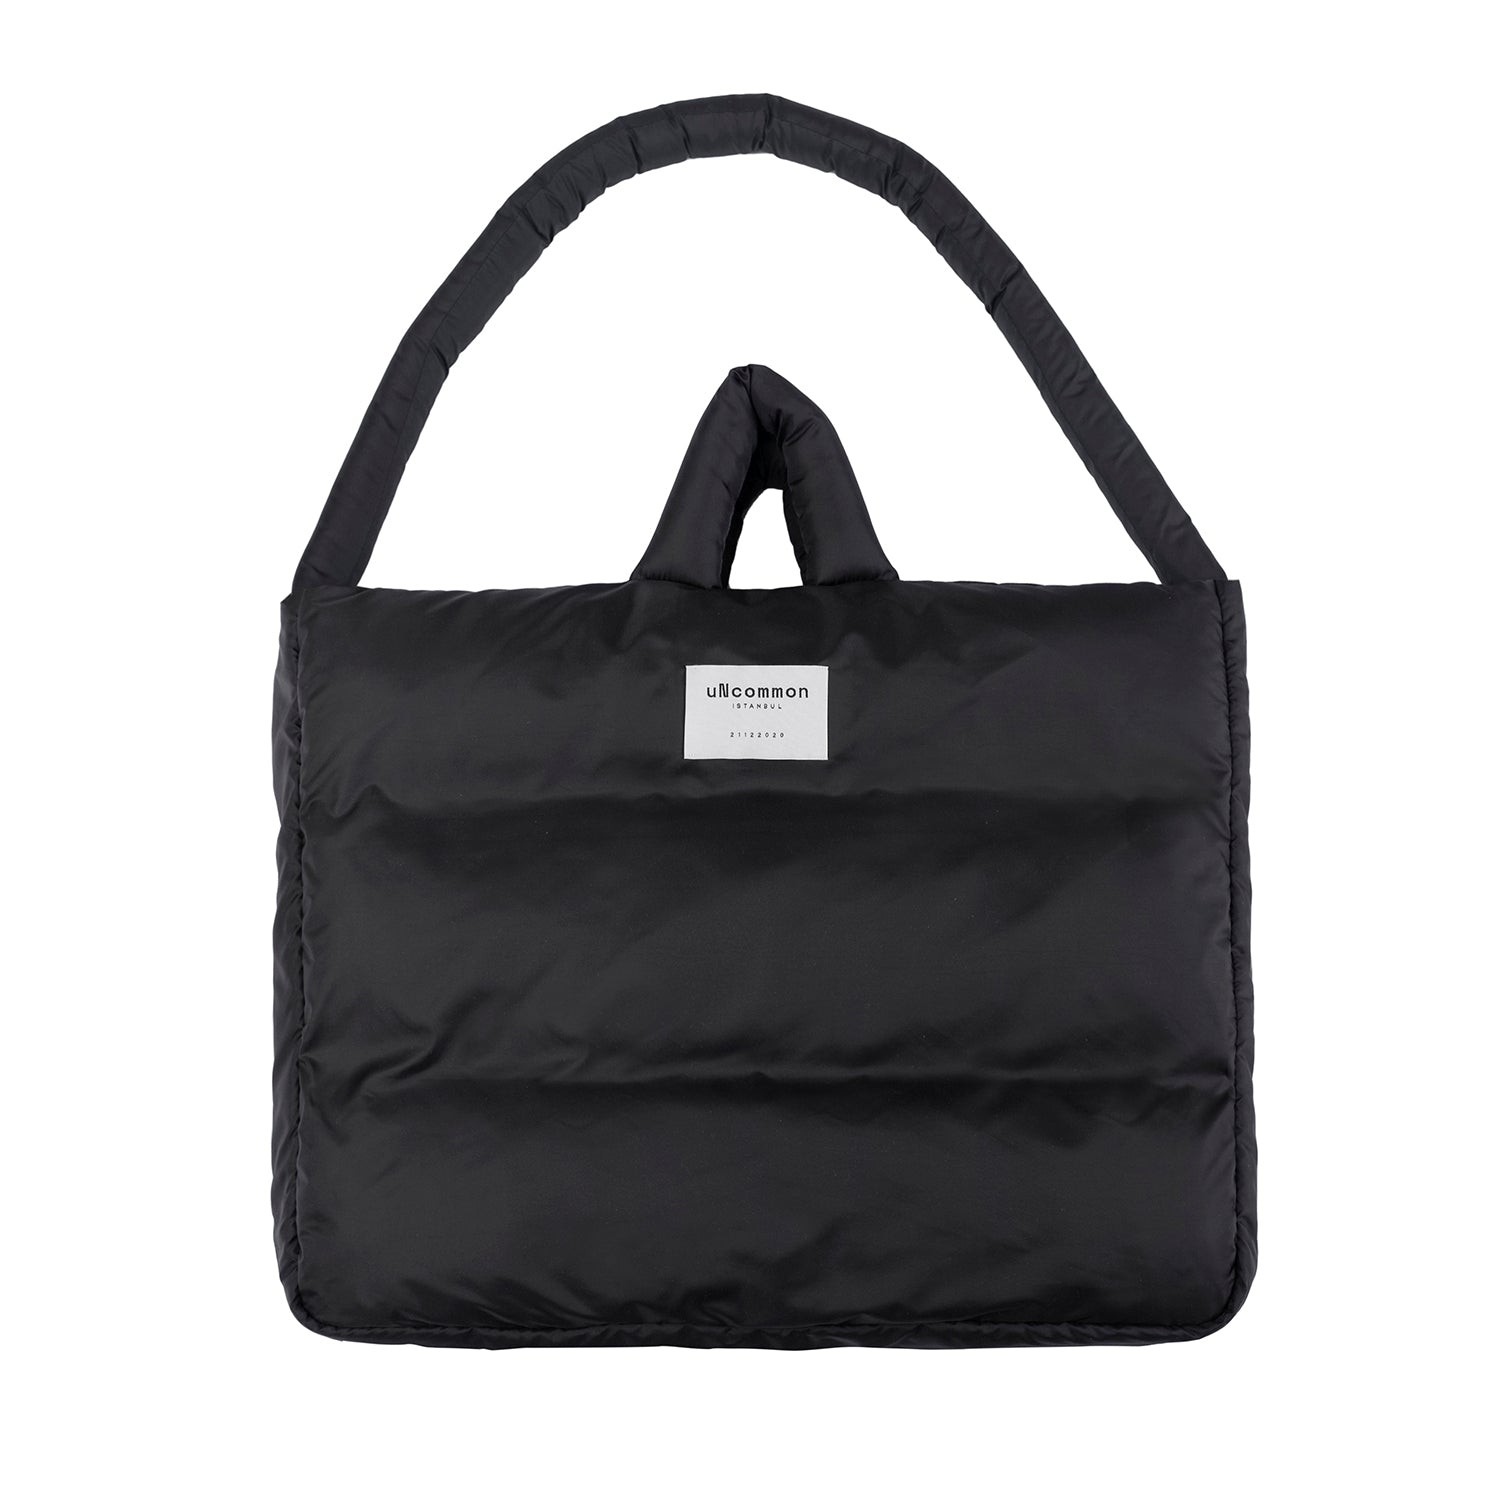 uNcommon Puffy Tote Bag Black